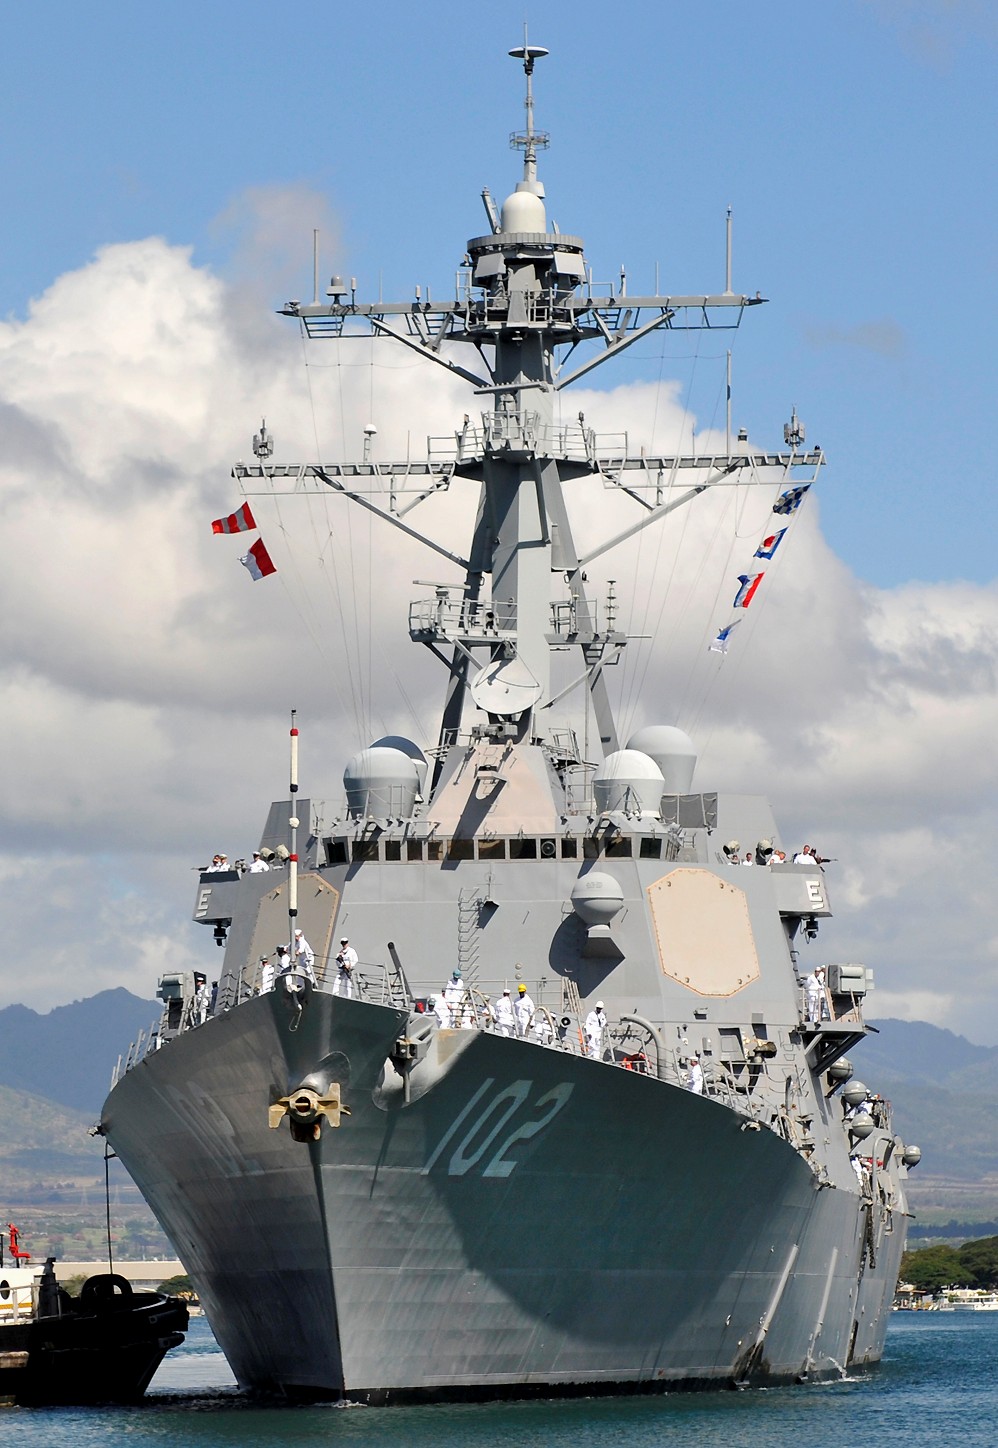 ddg-102 uss sampson arleigh burke class guided missile destroyer aegis us navy pearl harbor hawaii 20